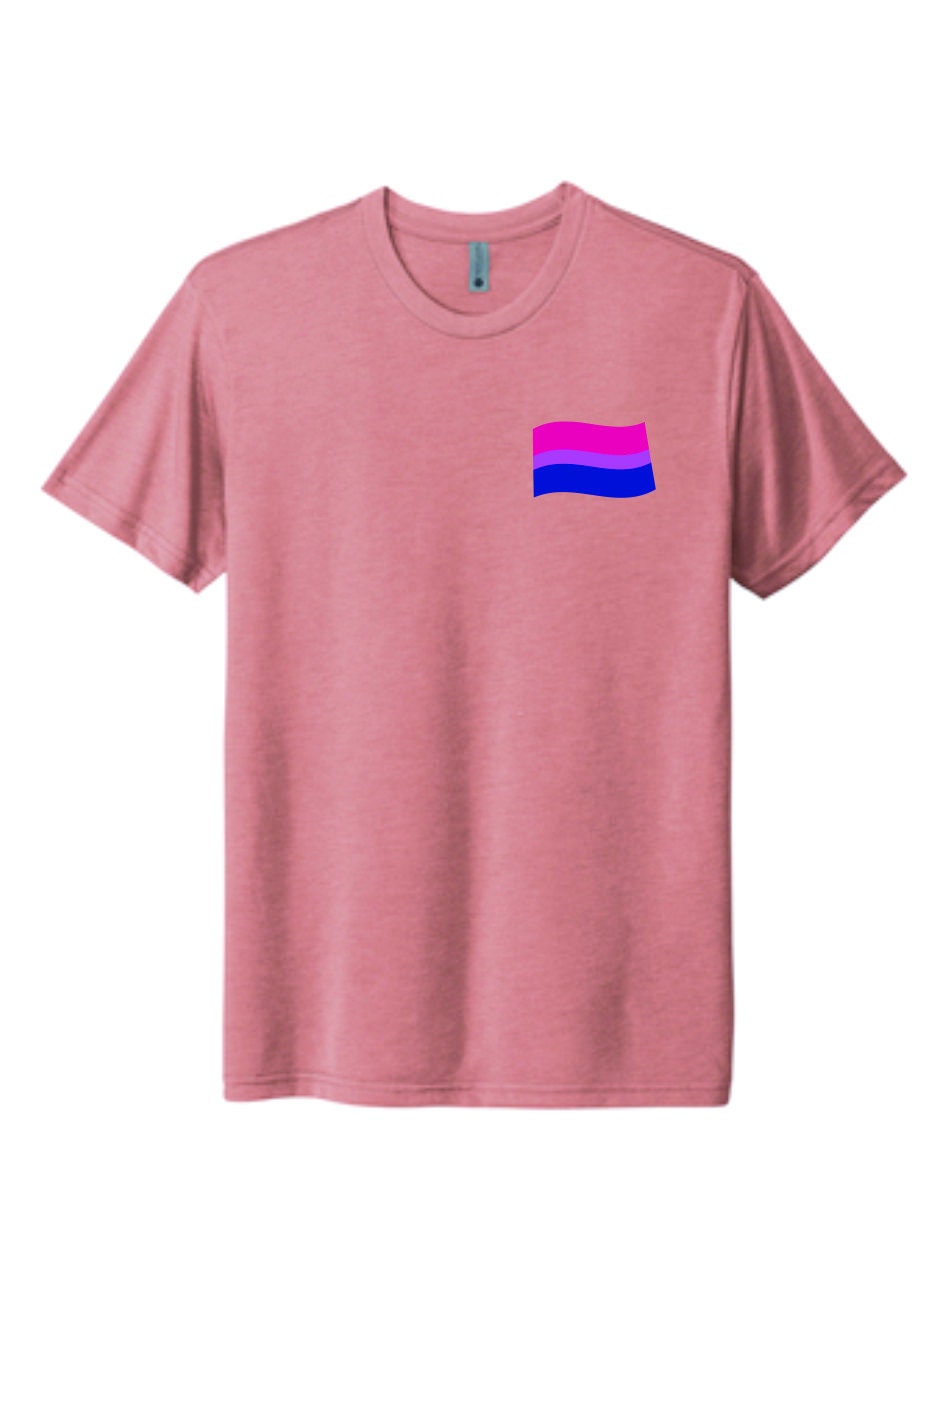 Bisexual Flag shirtBisexual pocket shirtLGBTQ shirtPride | Etsy